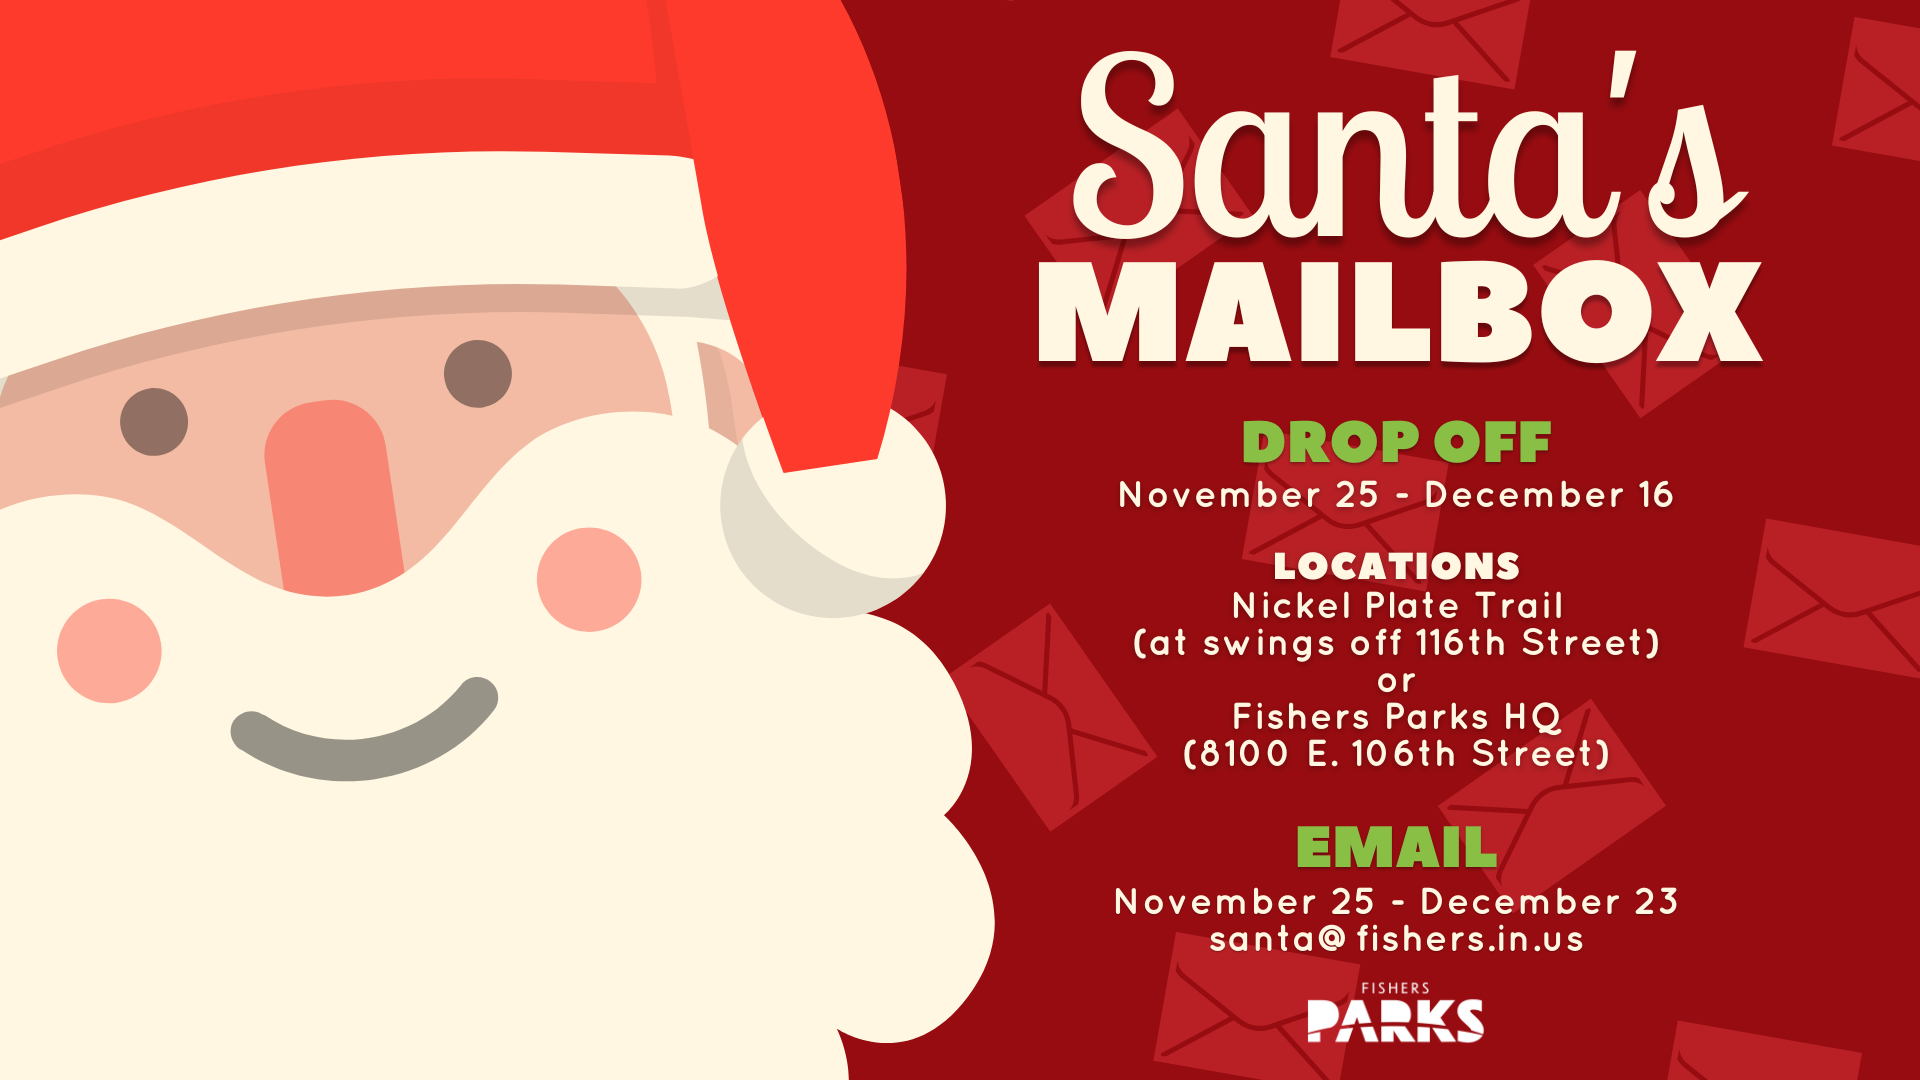 santa's mailbox drop off november 25 - december 16